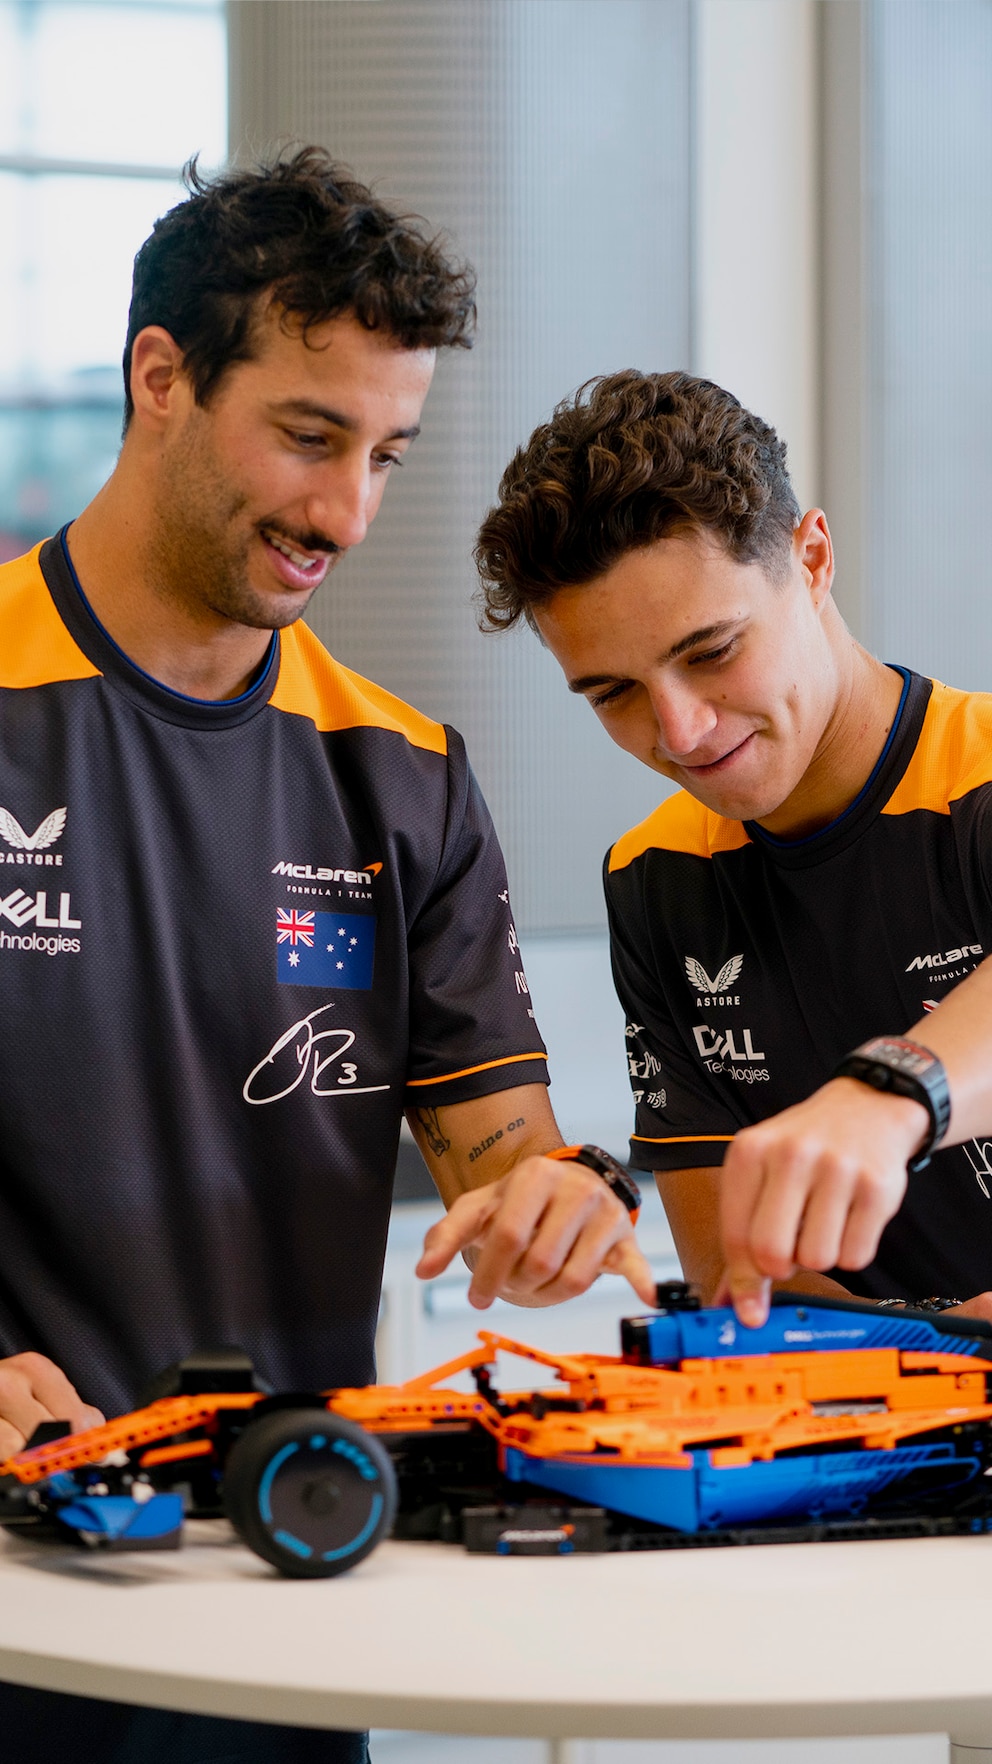 McLaren-Fahrer Daniel Ricciardo und Lando Norris haben ihre Freude am Lego-Modell.